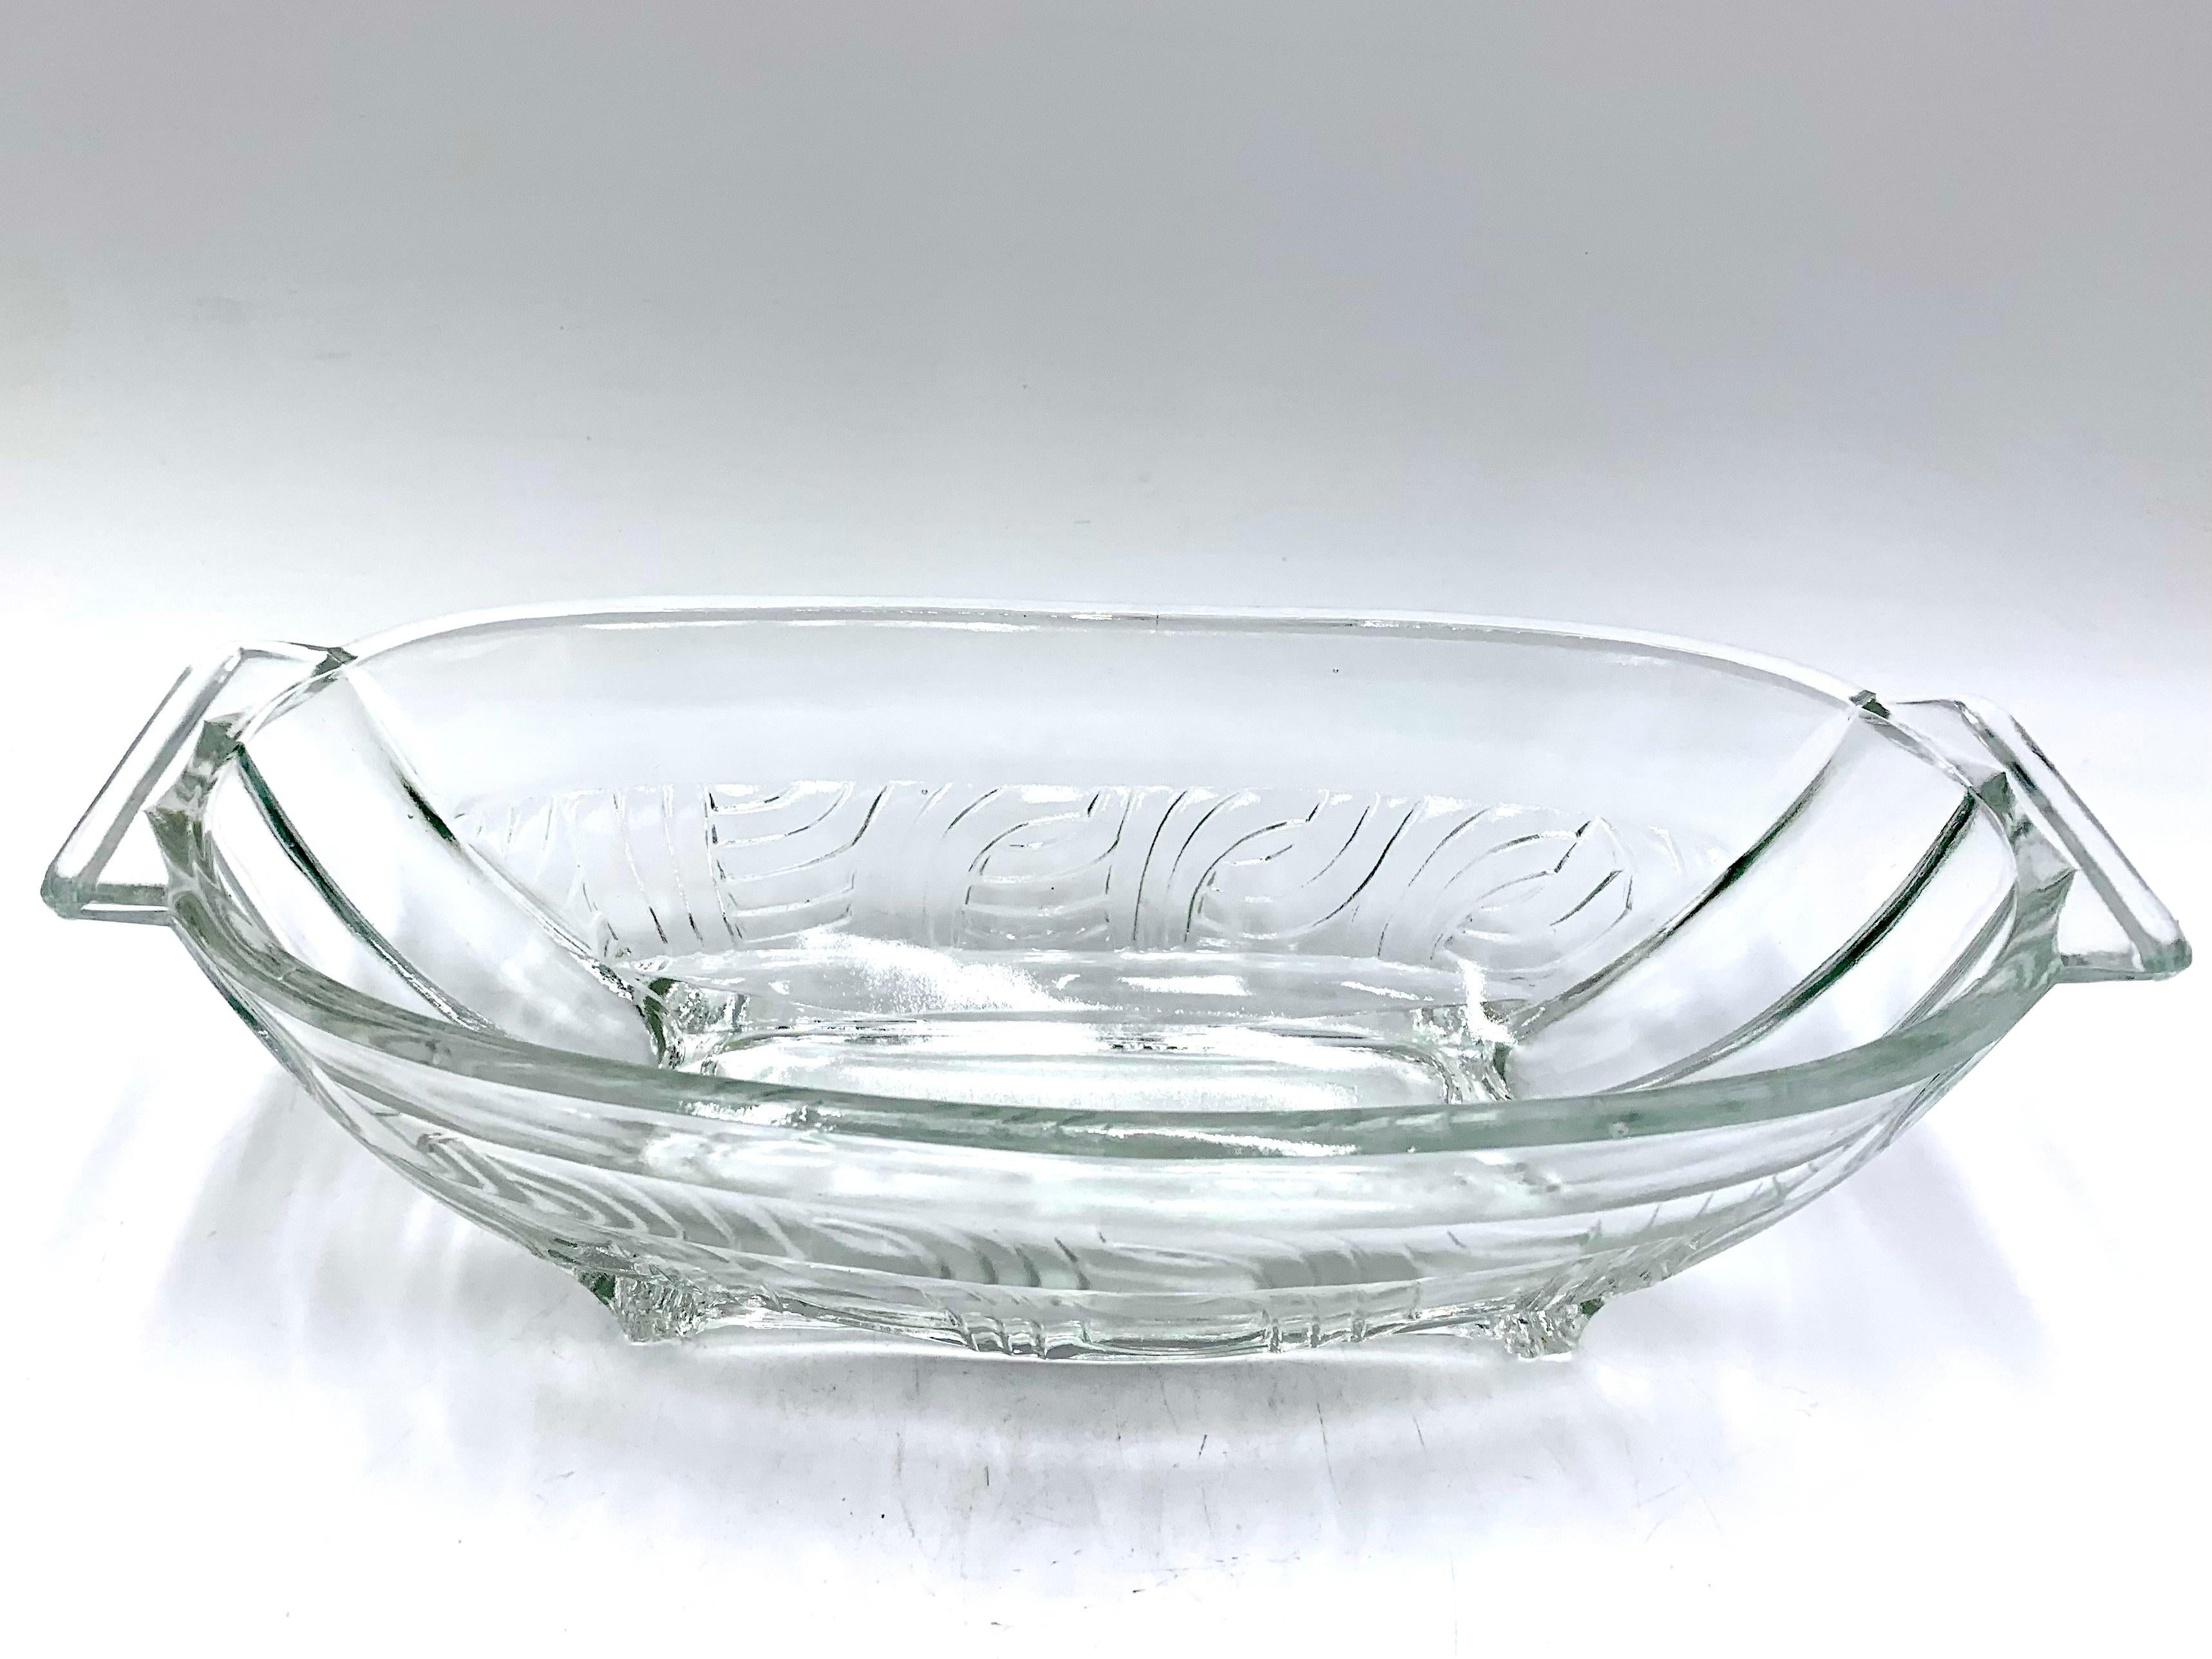 Glass bowl - jardiniere
Very good condition

Measures: height 8cm, width 28cm, depth 13,5cm.